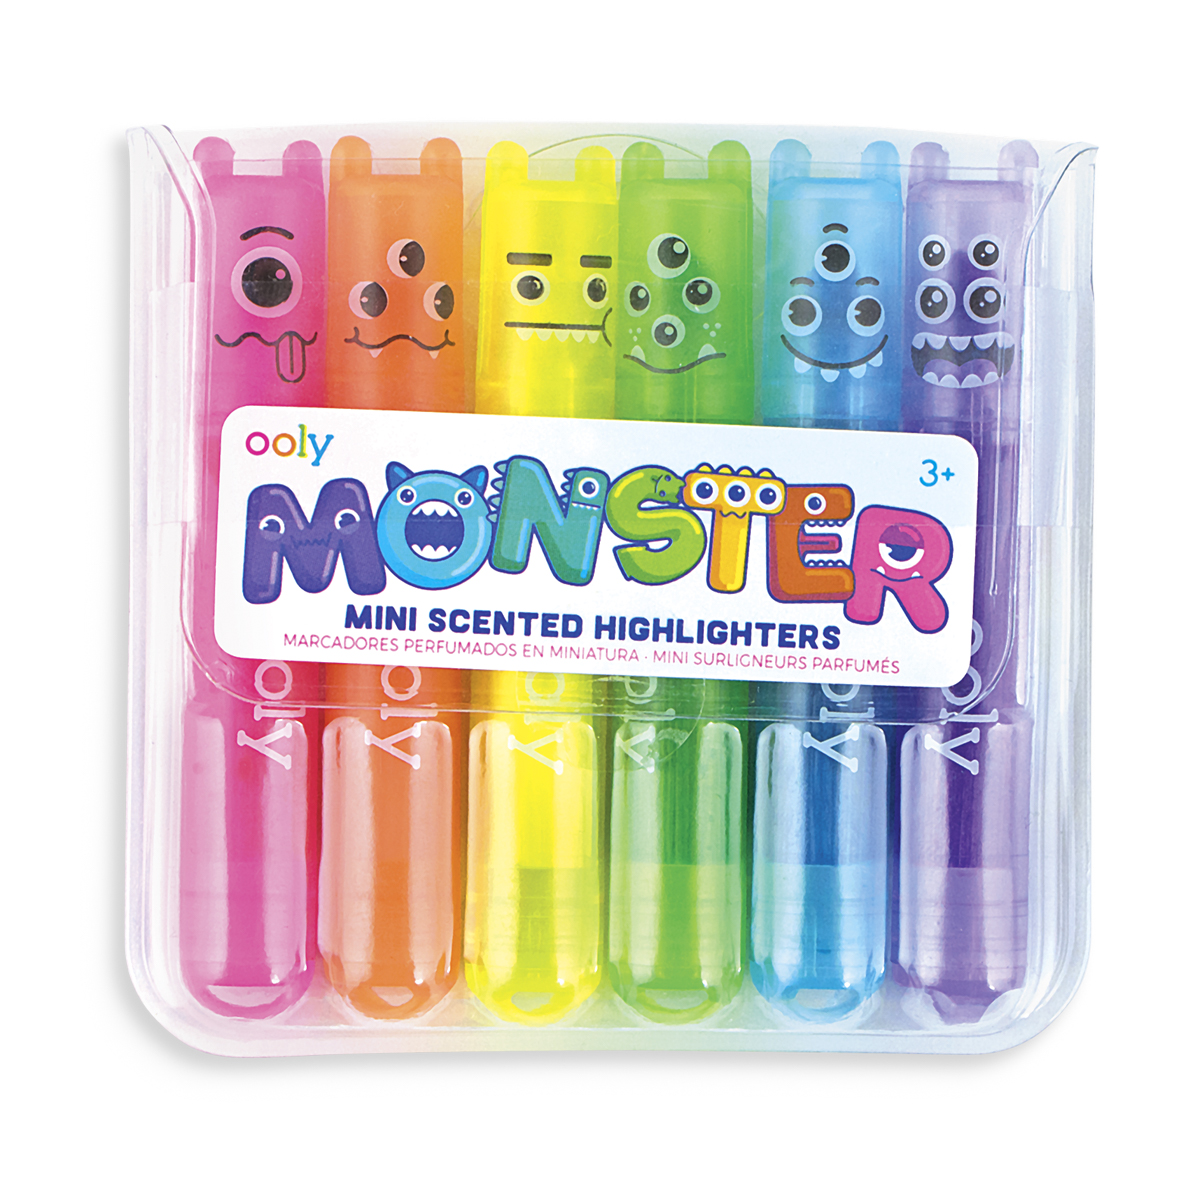  Ooly Monster Mini Kokulu 6'lı Highlighter